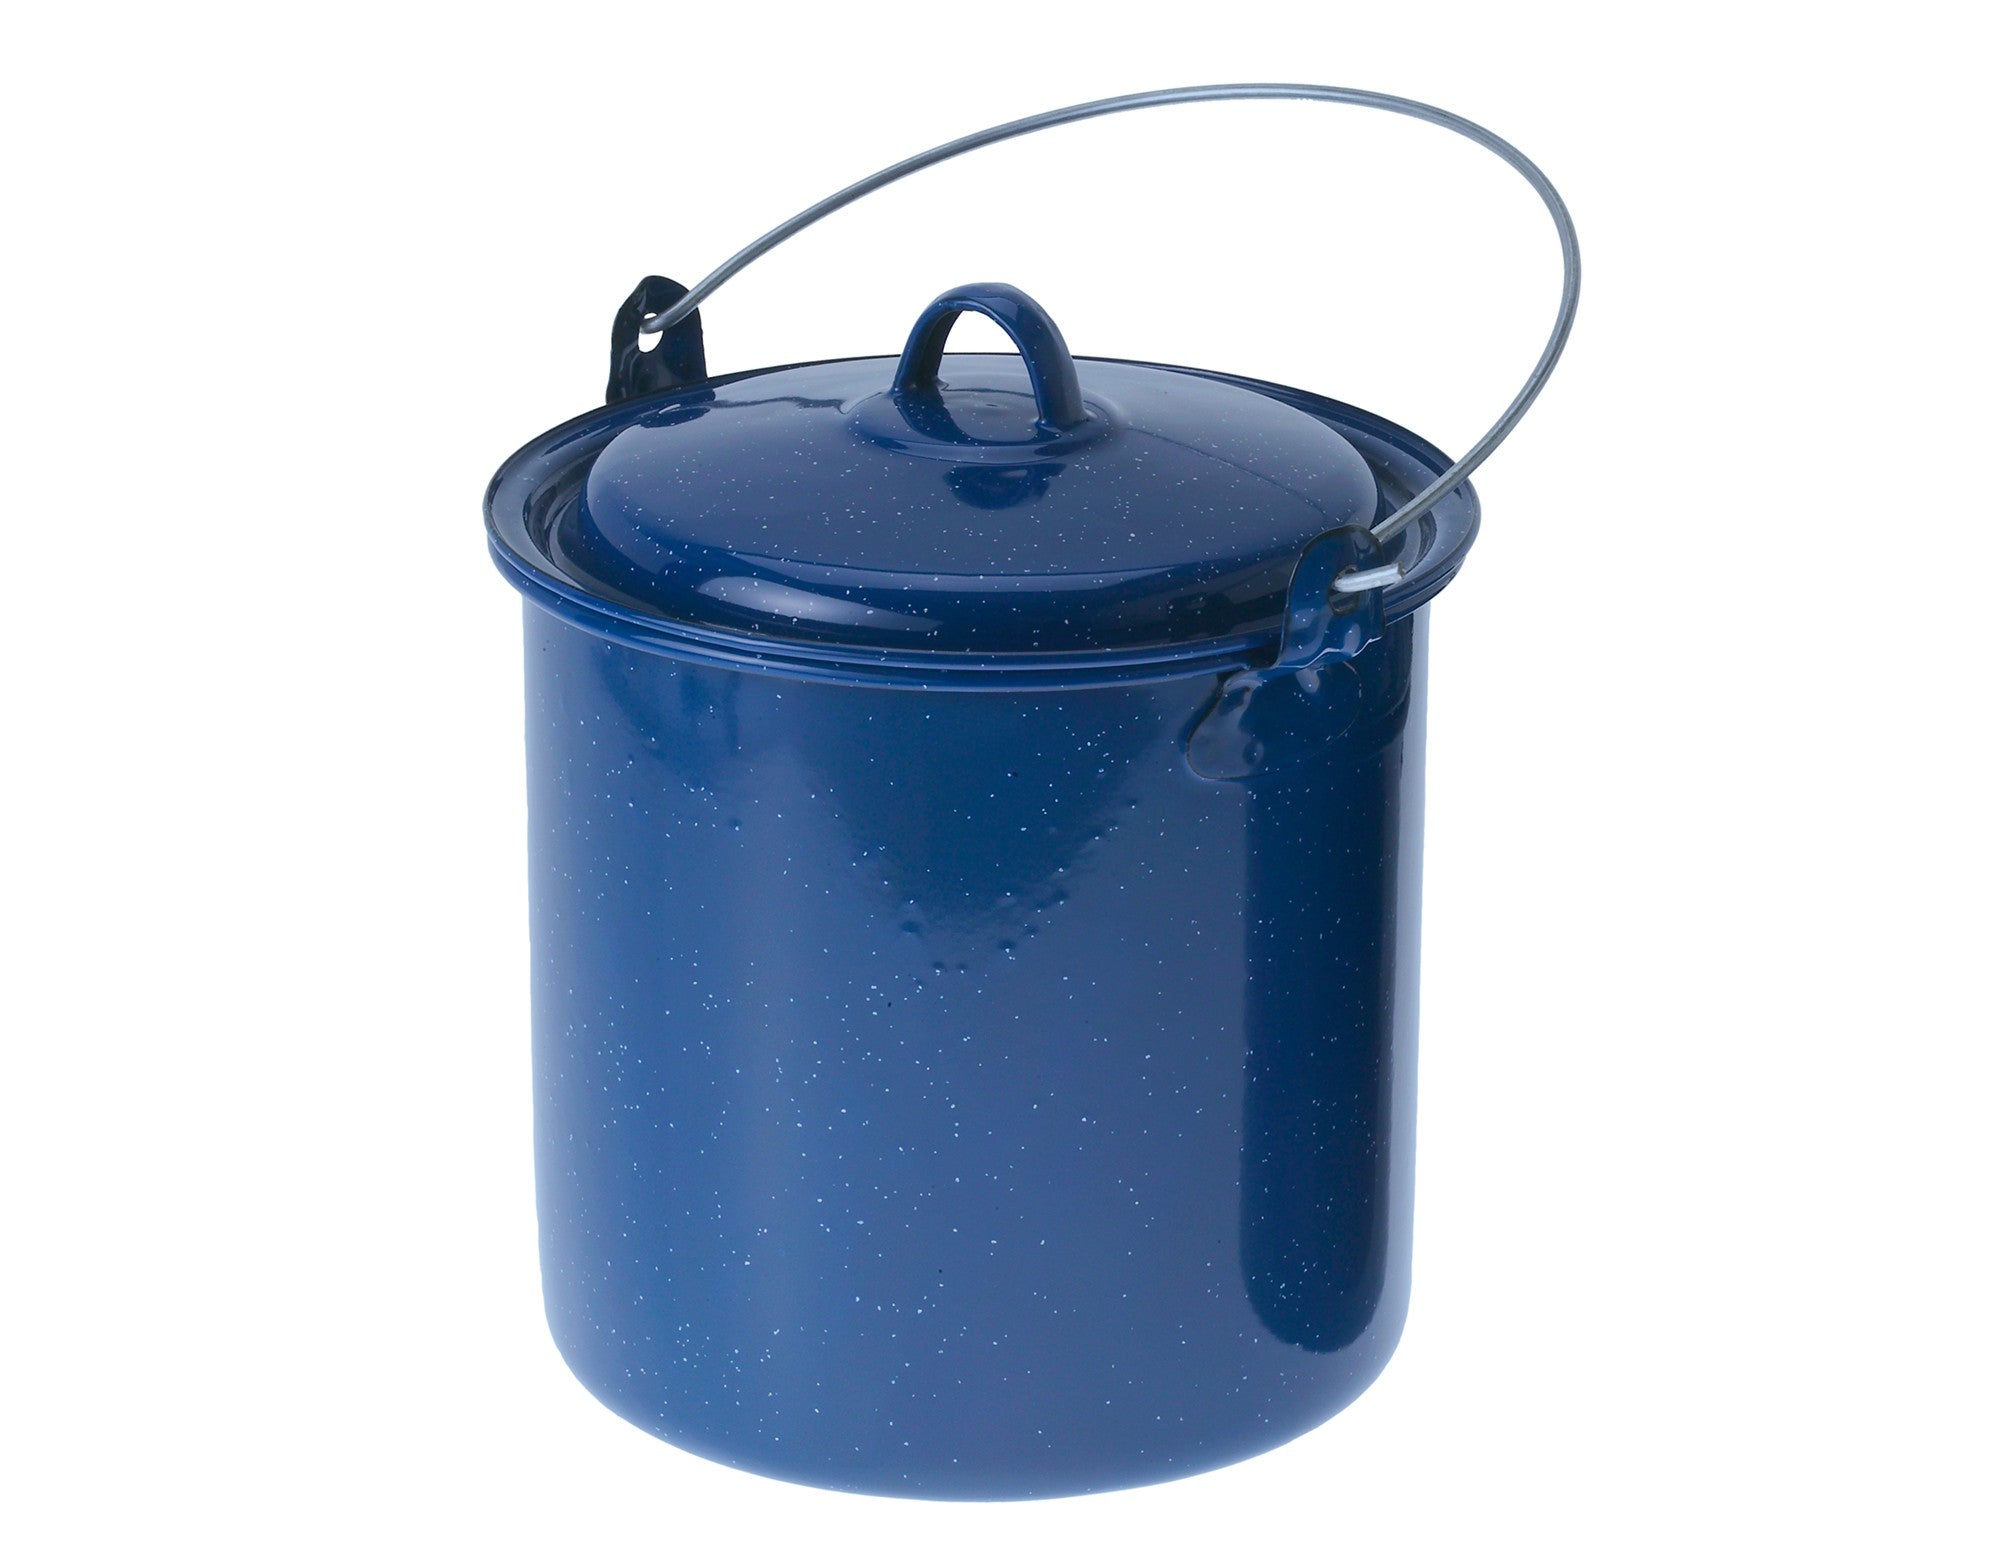 GSI Outdoors 5.75-Quart Stock Pot (Blue)